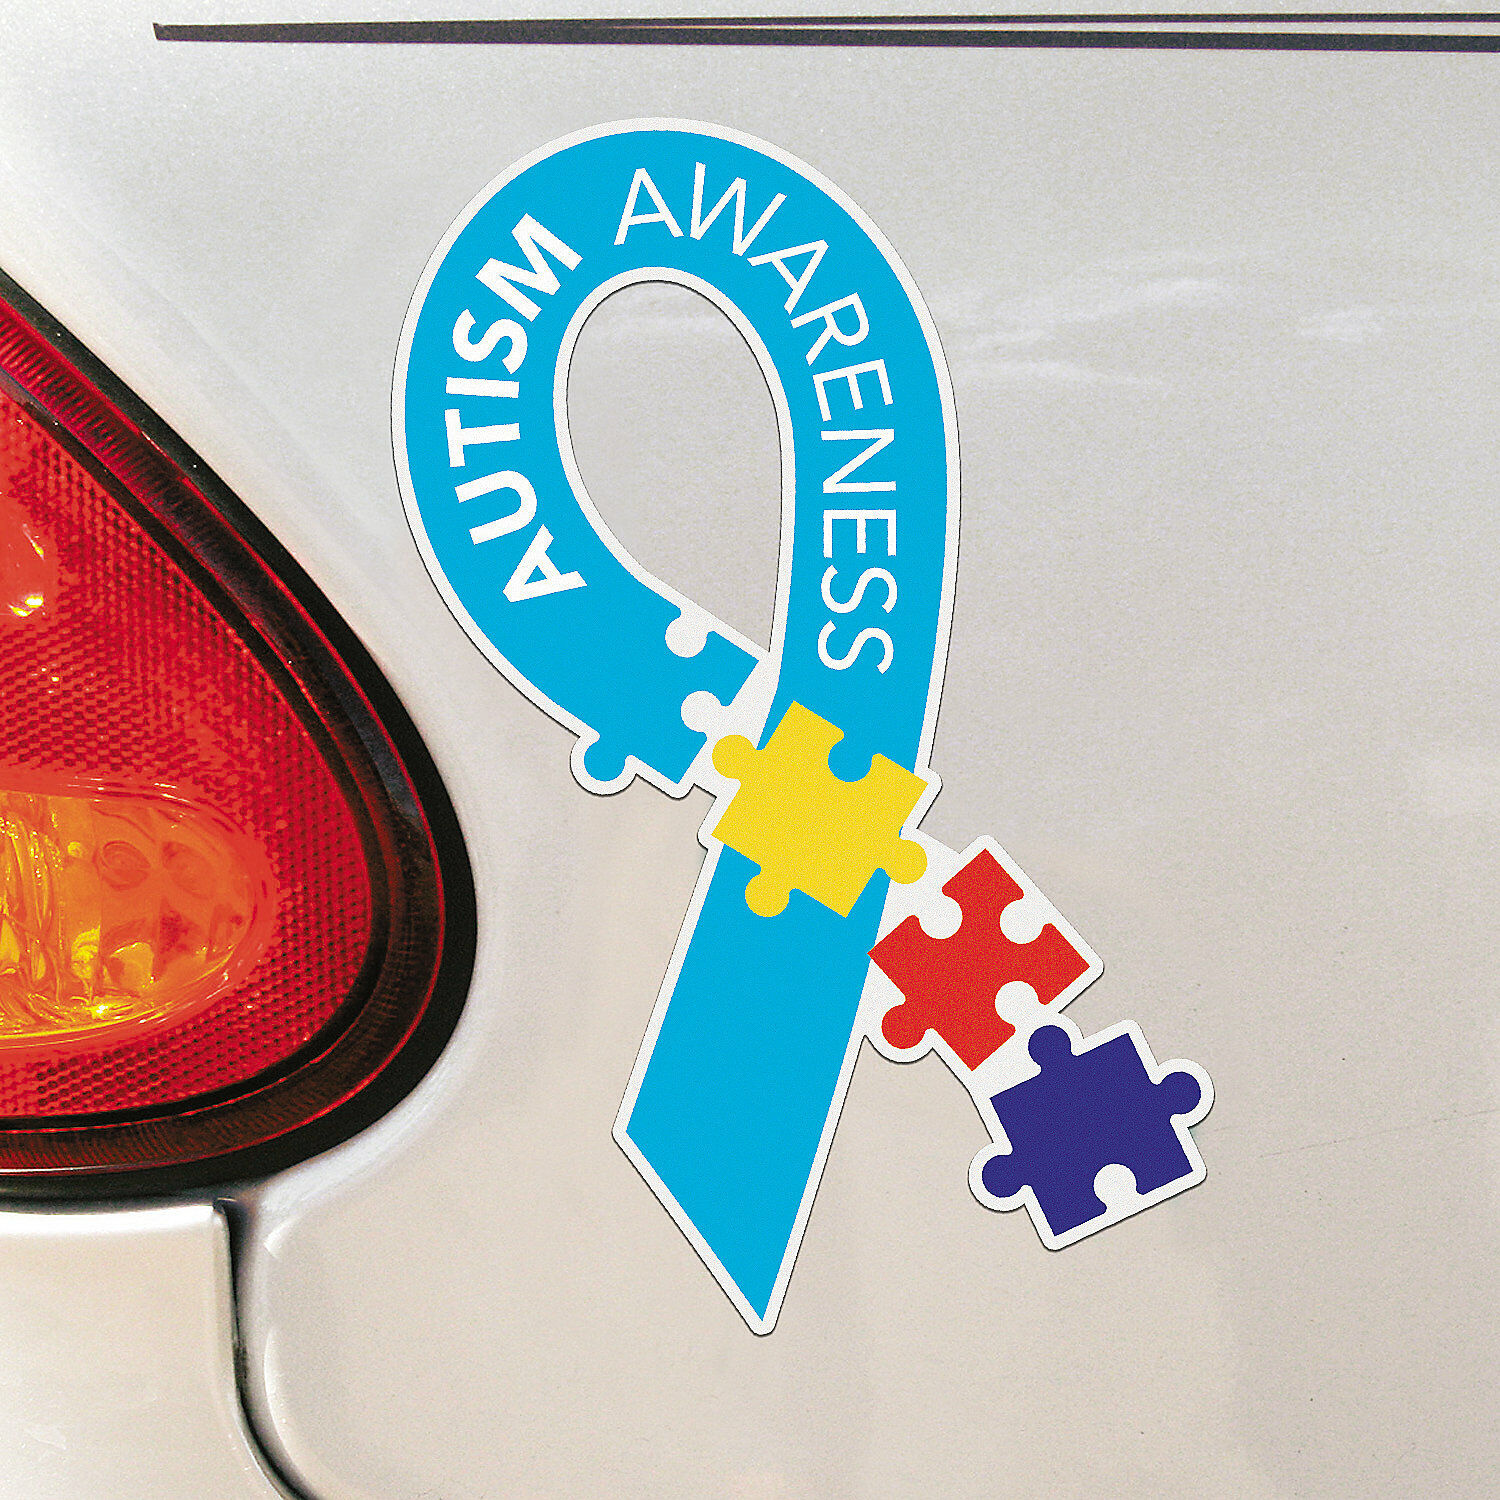 Autism Awareness Car Magnets, Party Decor, 12 Pieces